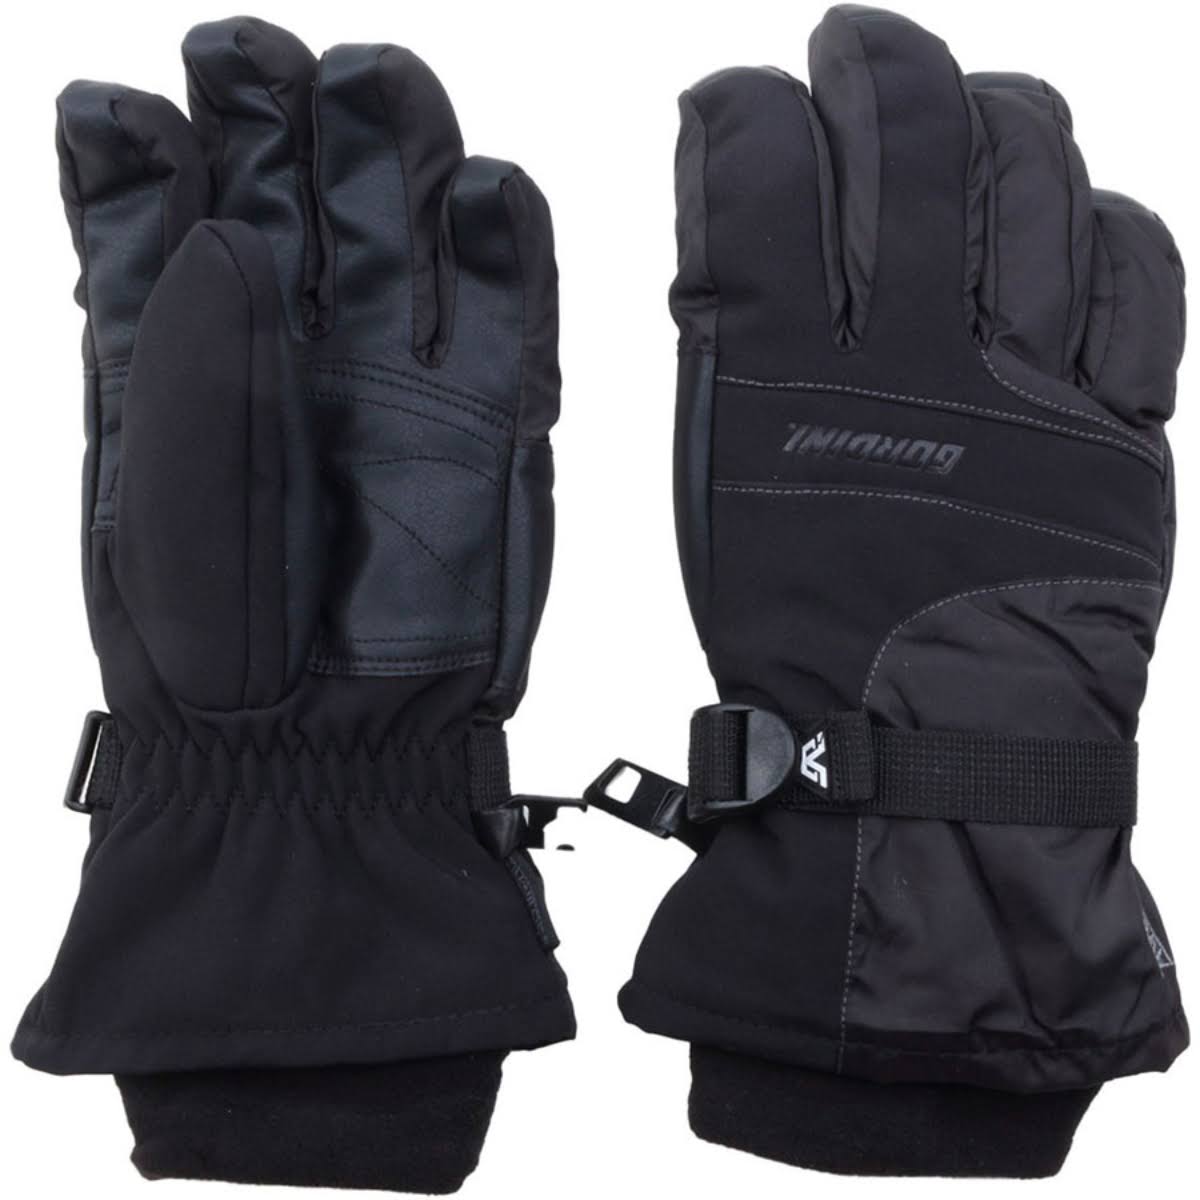 Gordini Aquabloc III Junior Gloves Girls Ski Snow Gloves - Black and Pink , X-Small